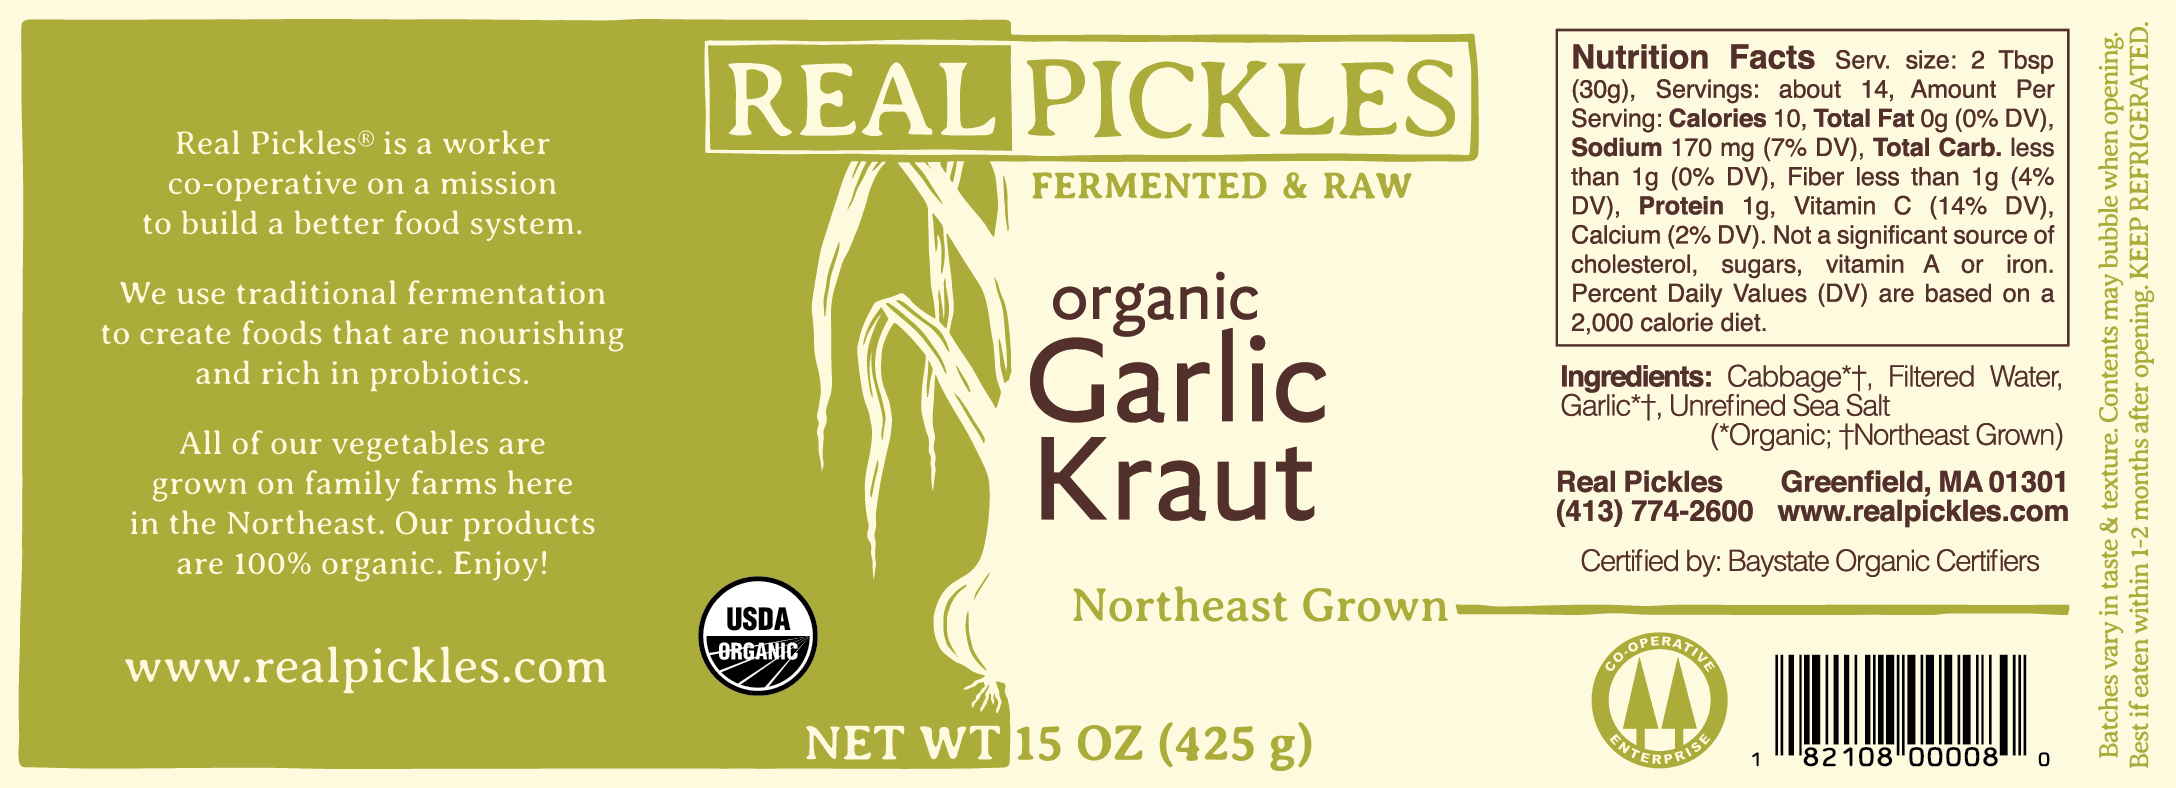 RP Garlic Kraut v3 (outlines)-01